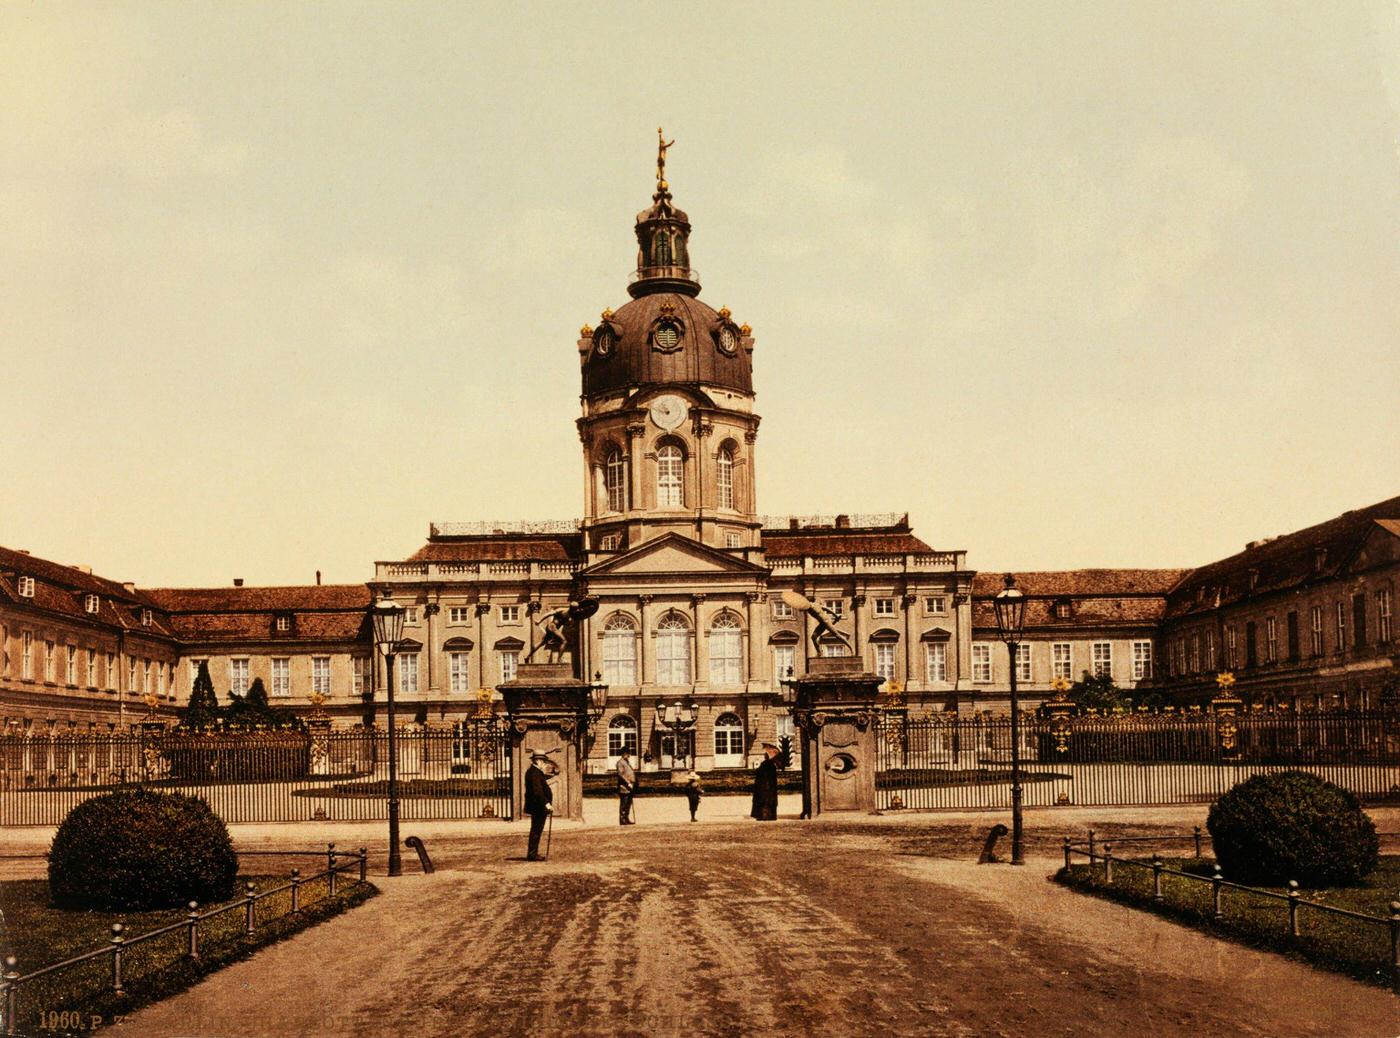 The Charlottenburg Royal Castle, Berlin, Germany, late 19th century.